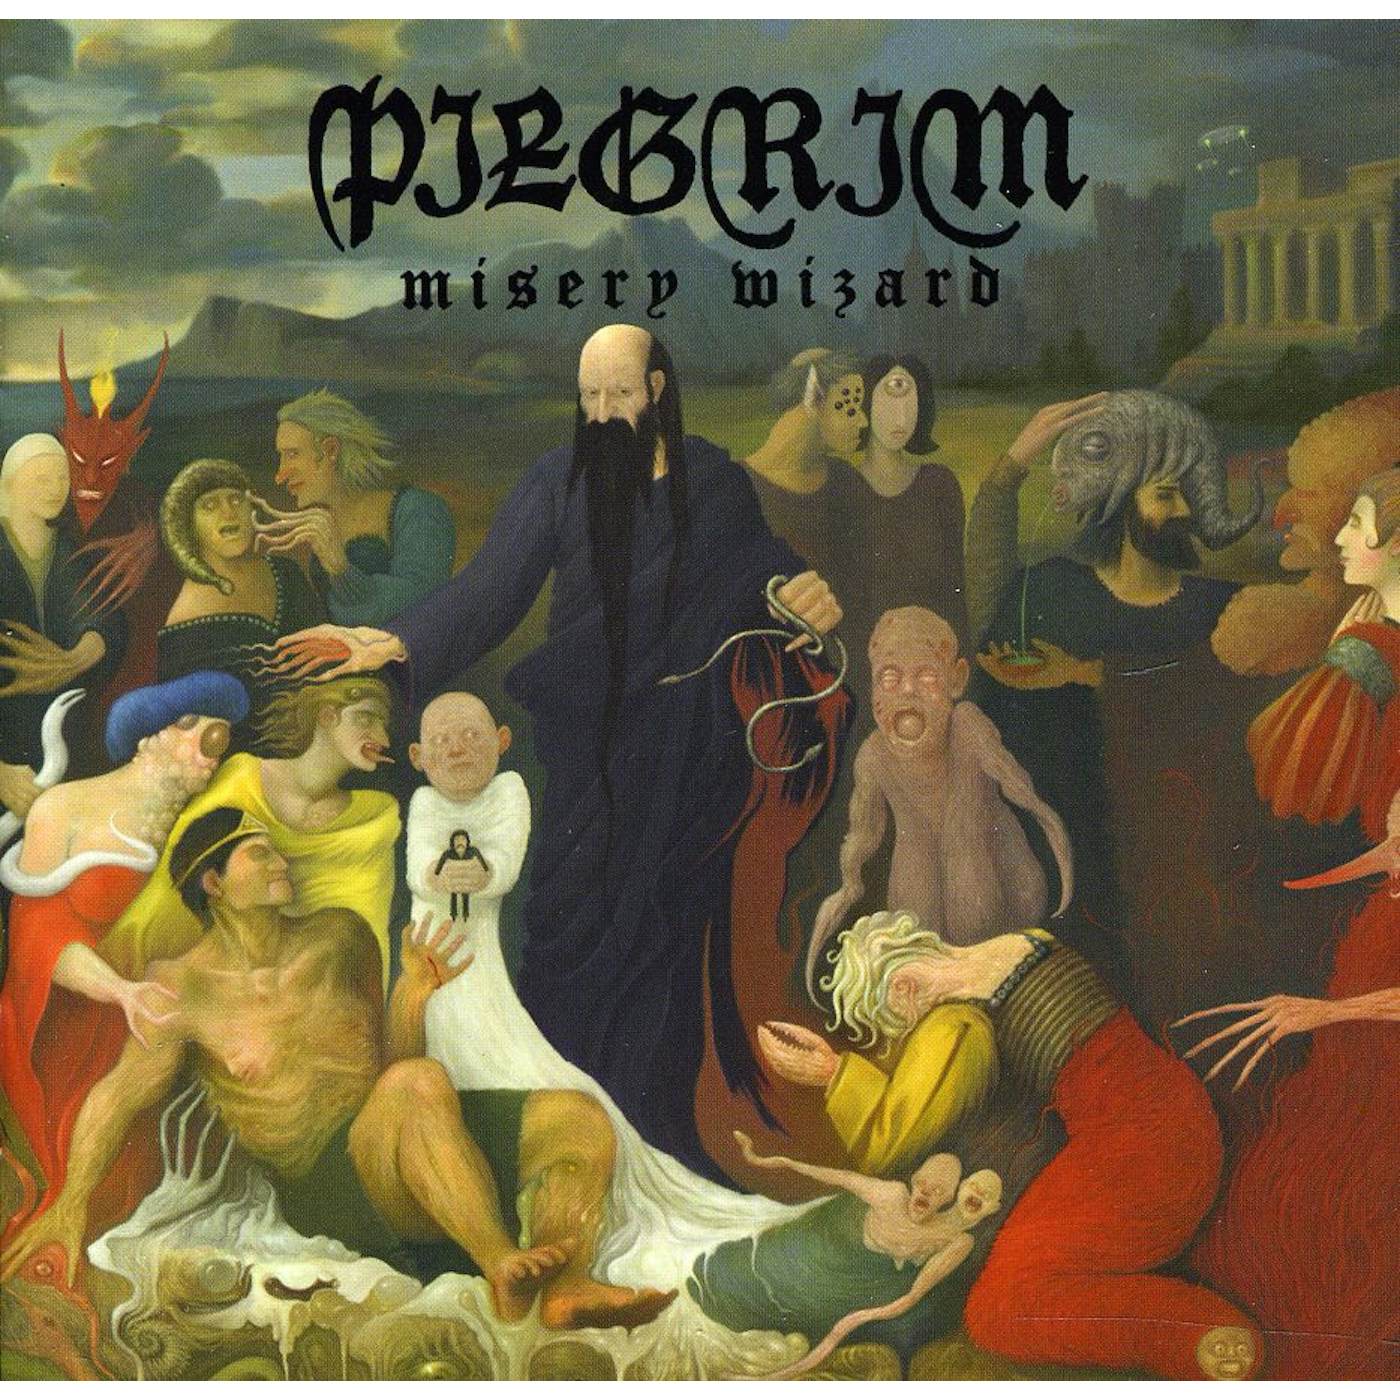 The Pilgrim MISERY WIZARD CD